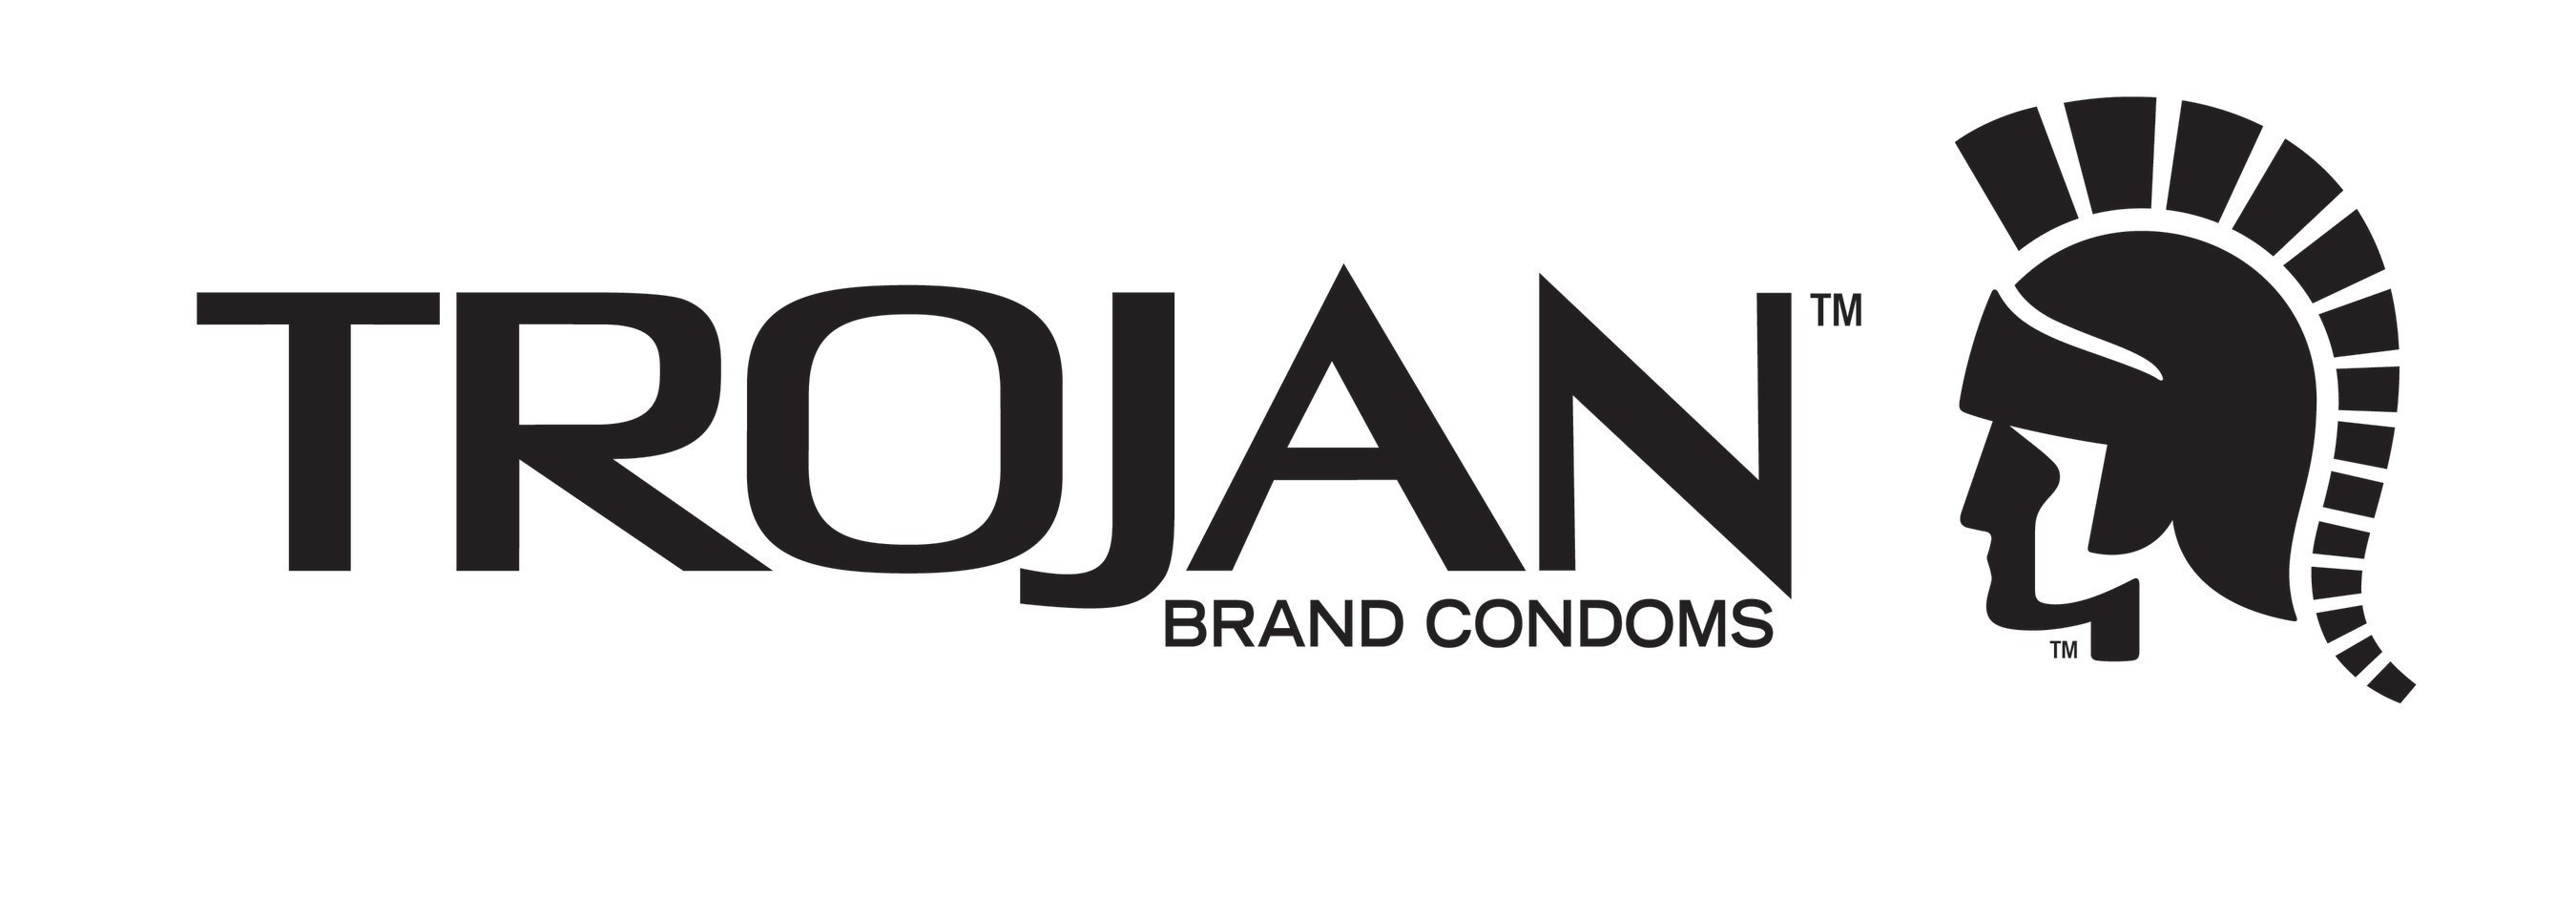 Trojan™ Brand Condoms Partners 